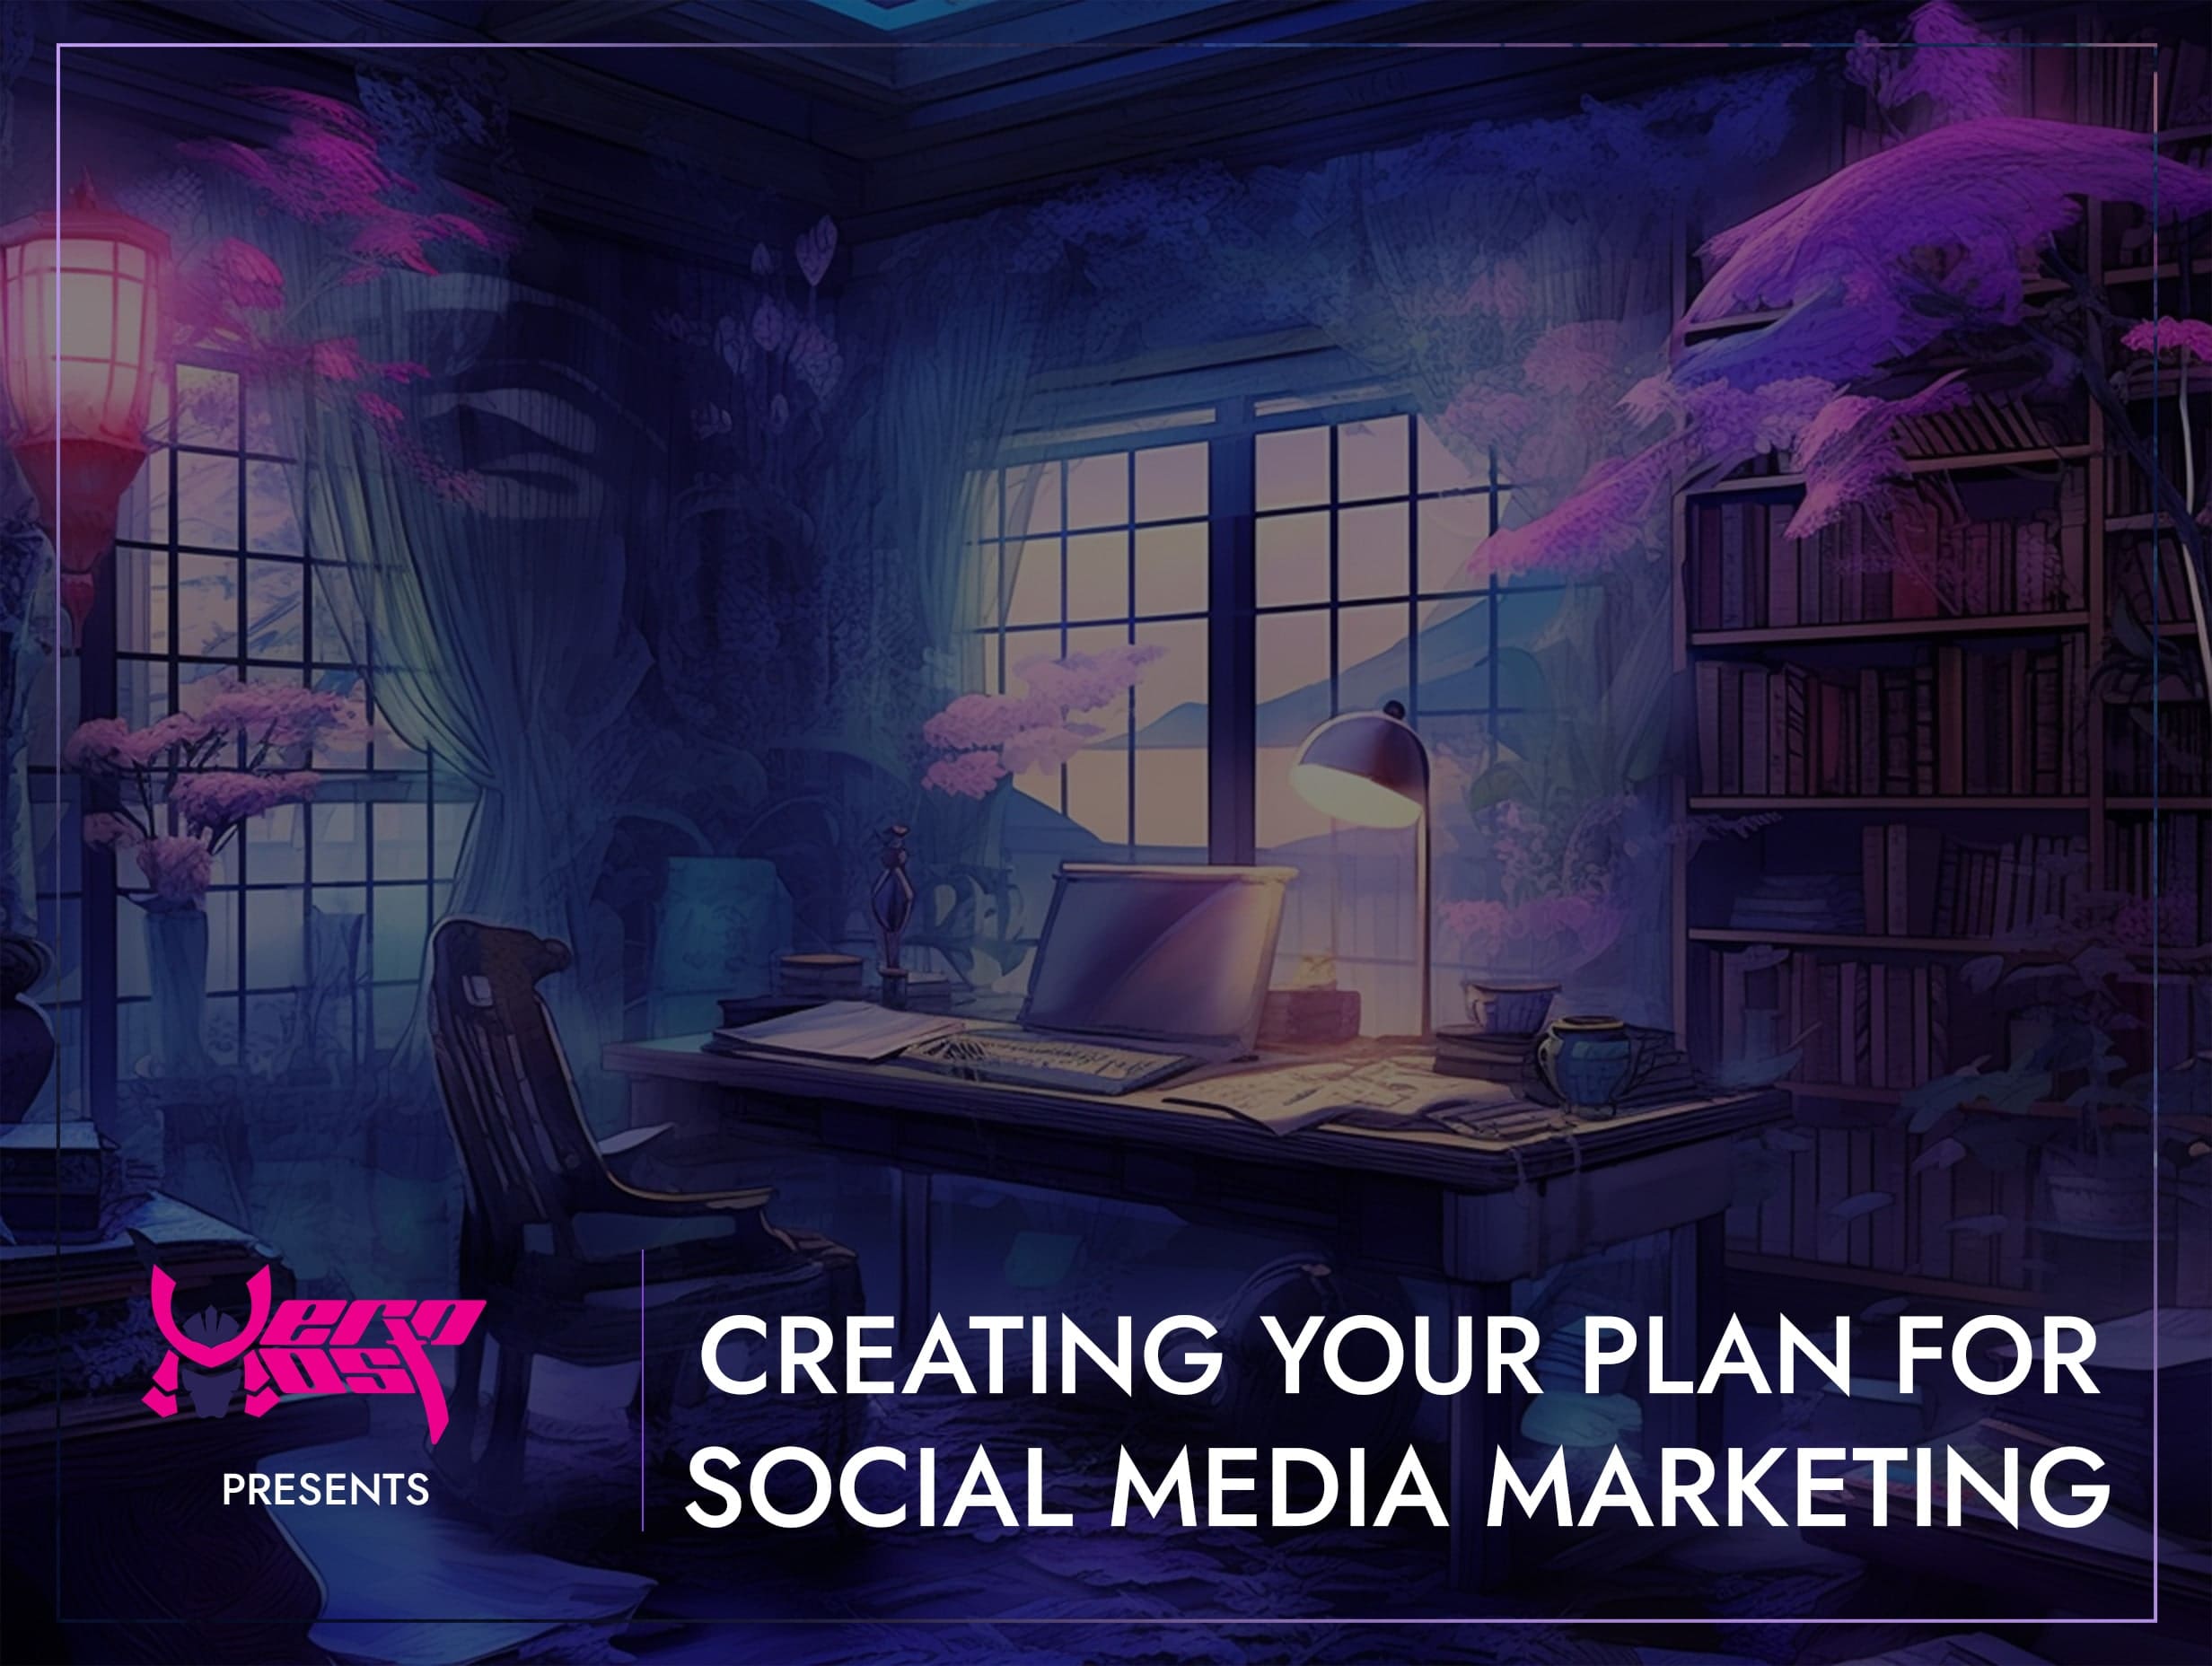 Creating a Social Media Marketing Plan